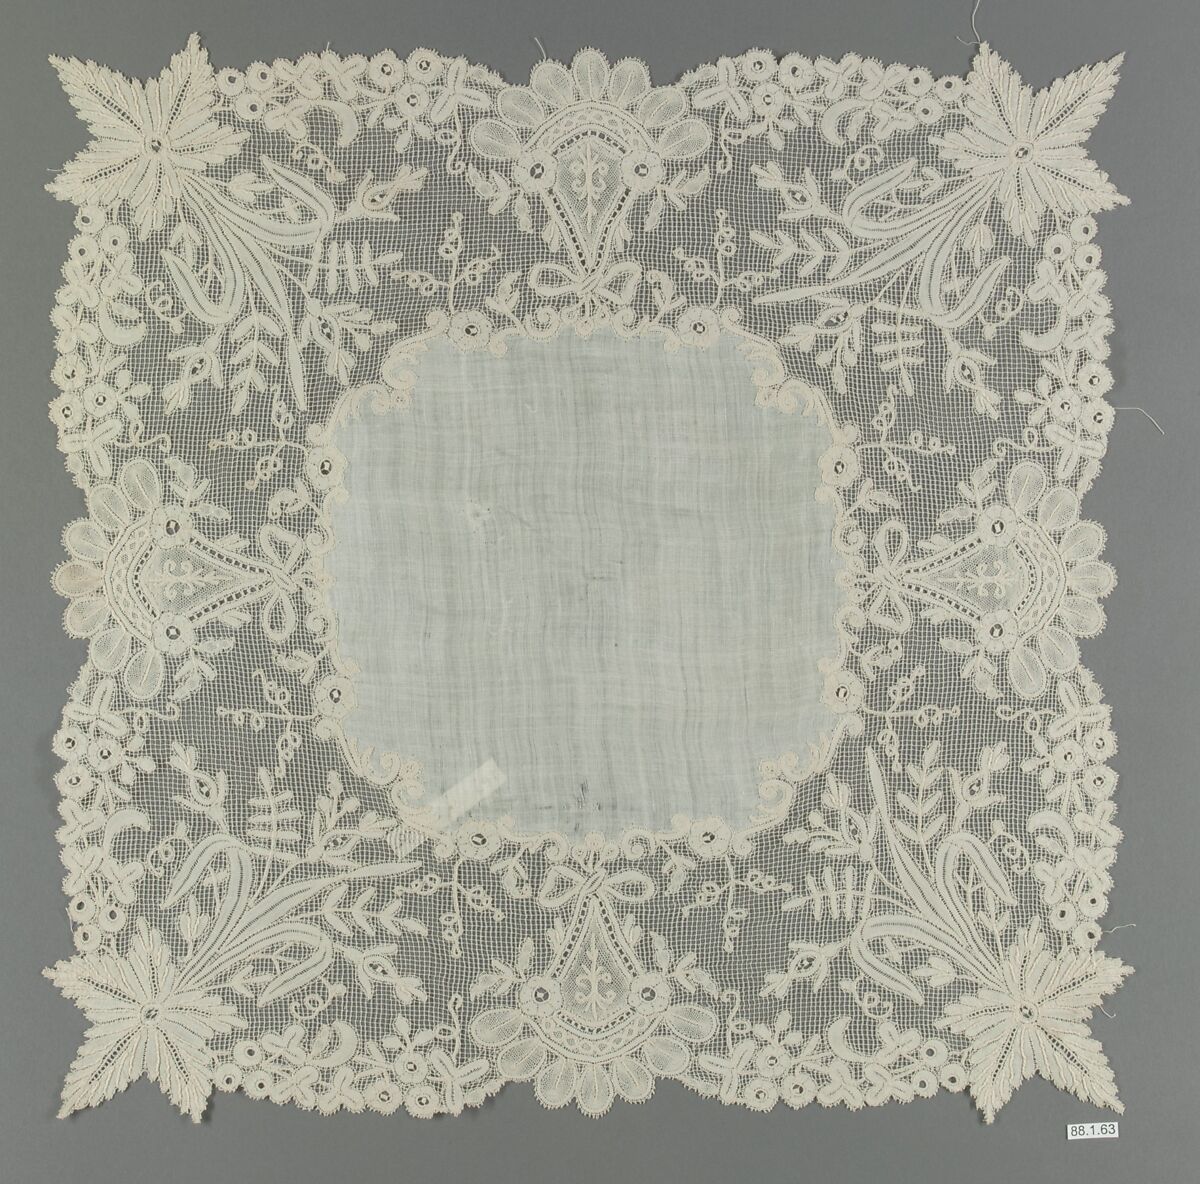 Handkerchief, Bobbin lace, Valenciennes lace, Duchesse lace, French 